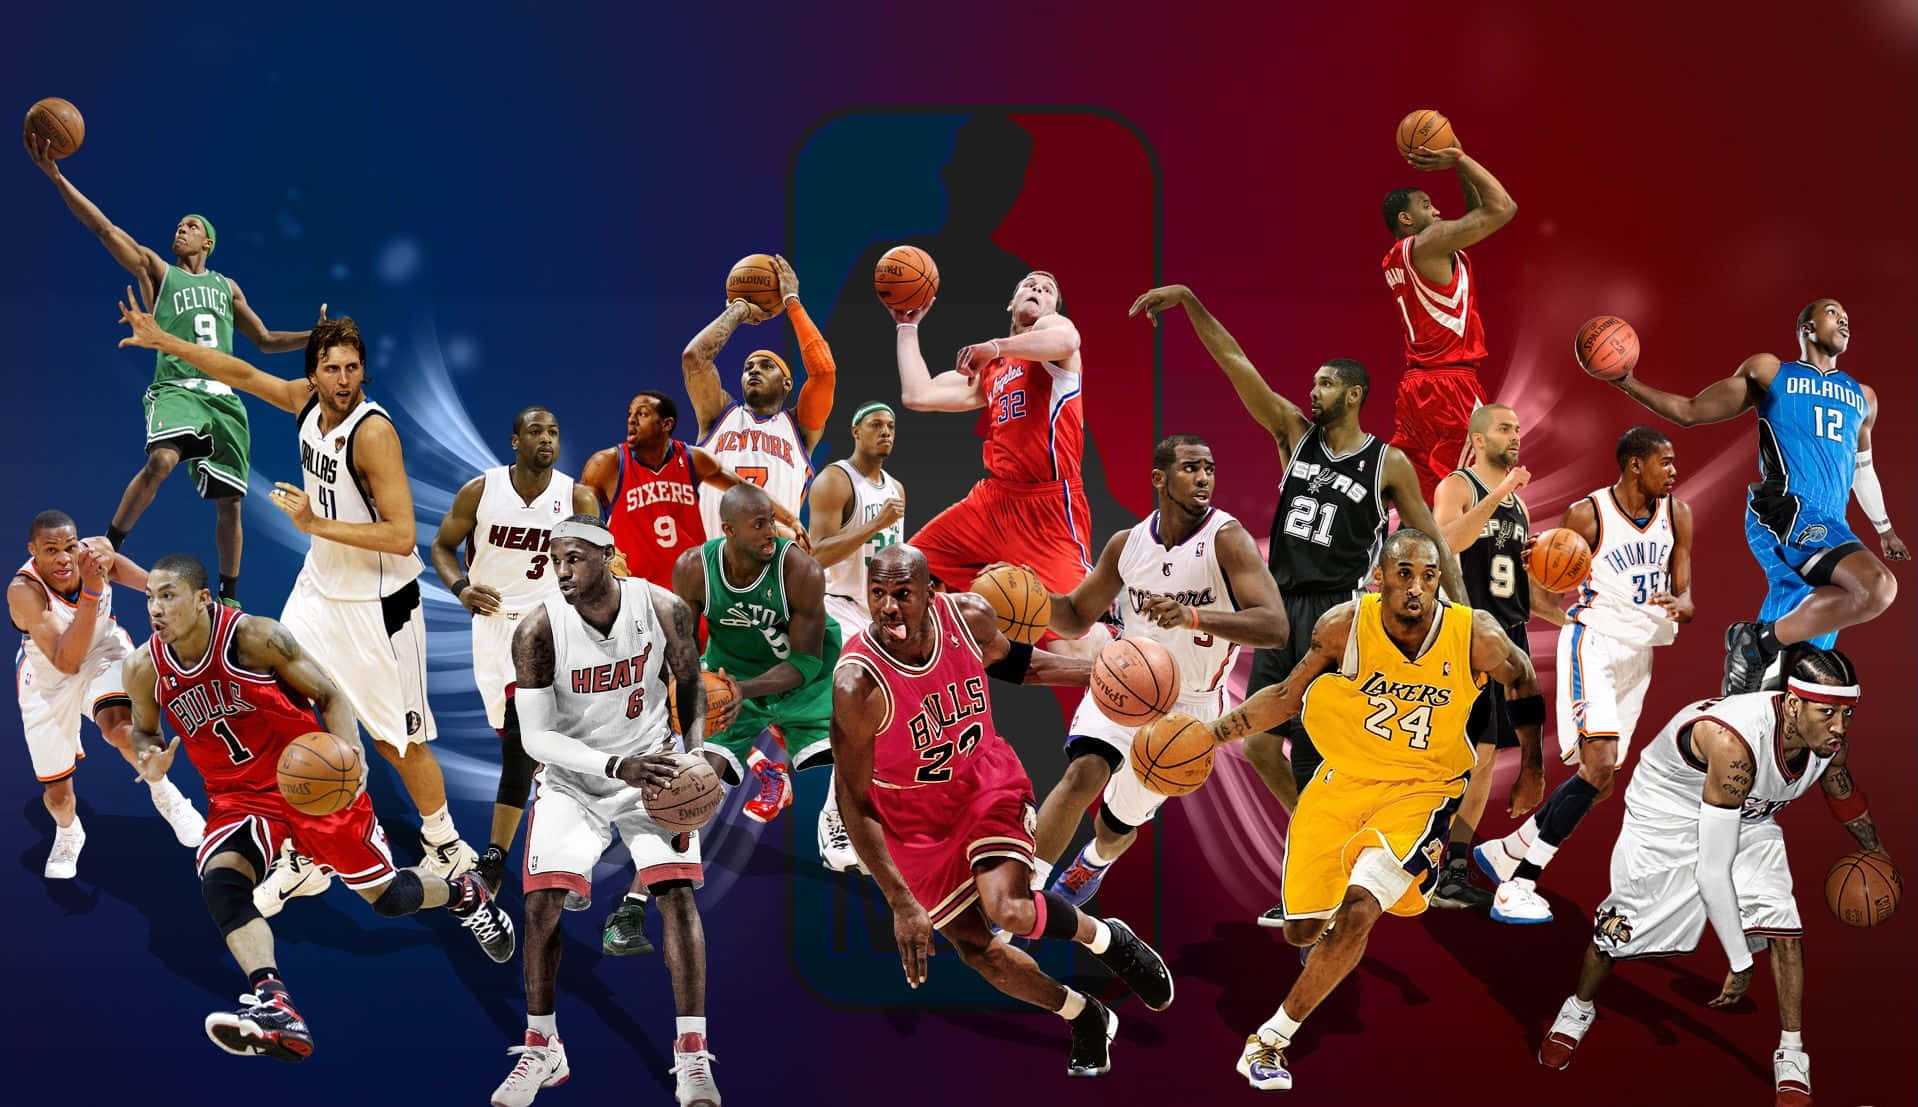 Backgroundd'arte Digitale Per Giocatori Professionisti Di Basket.